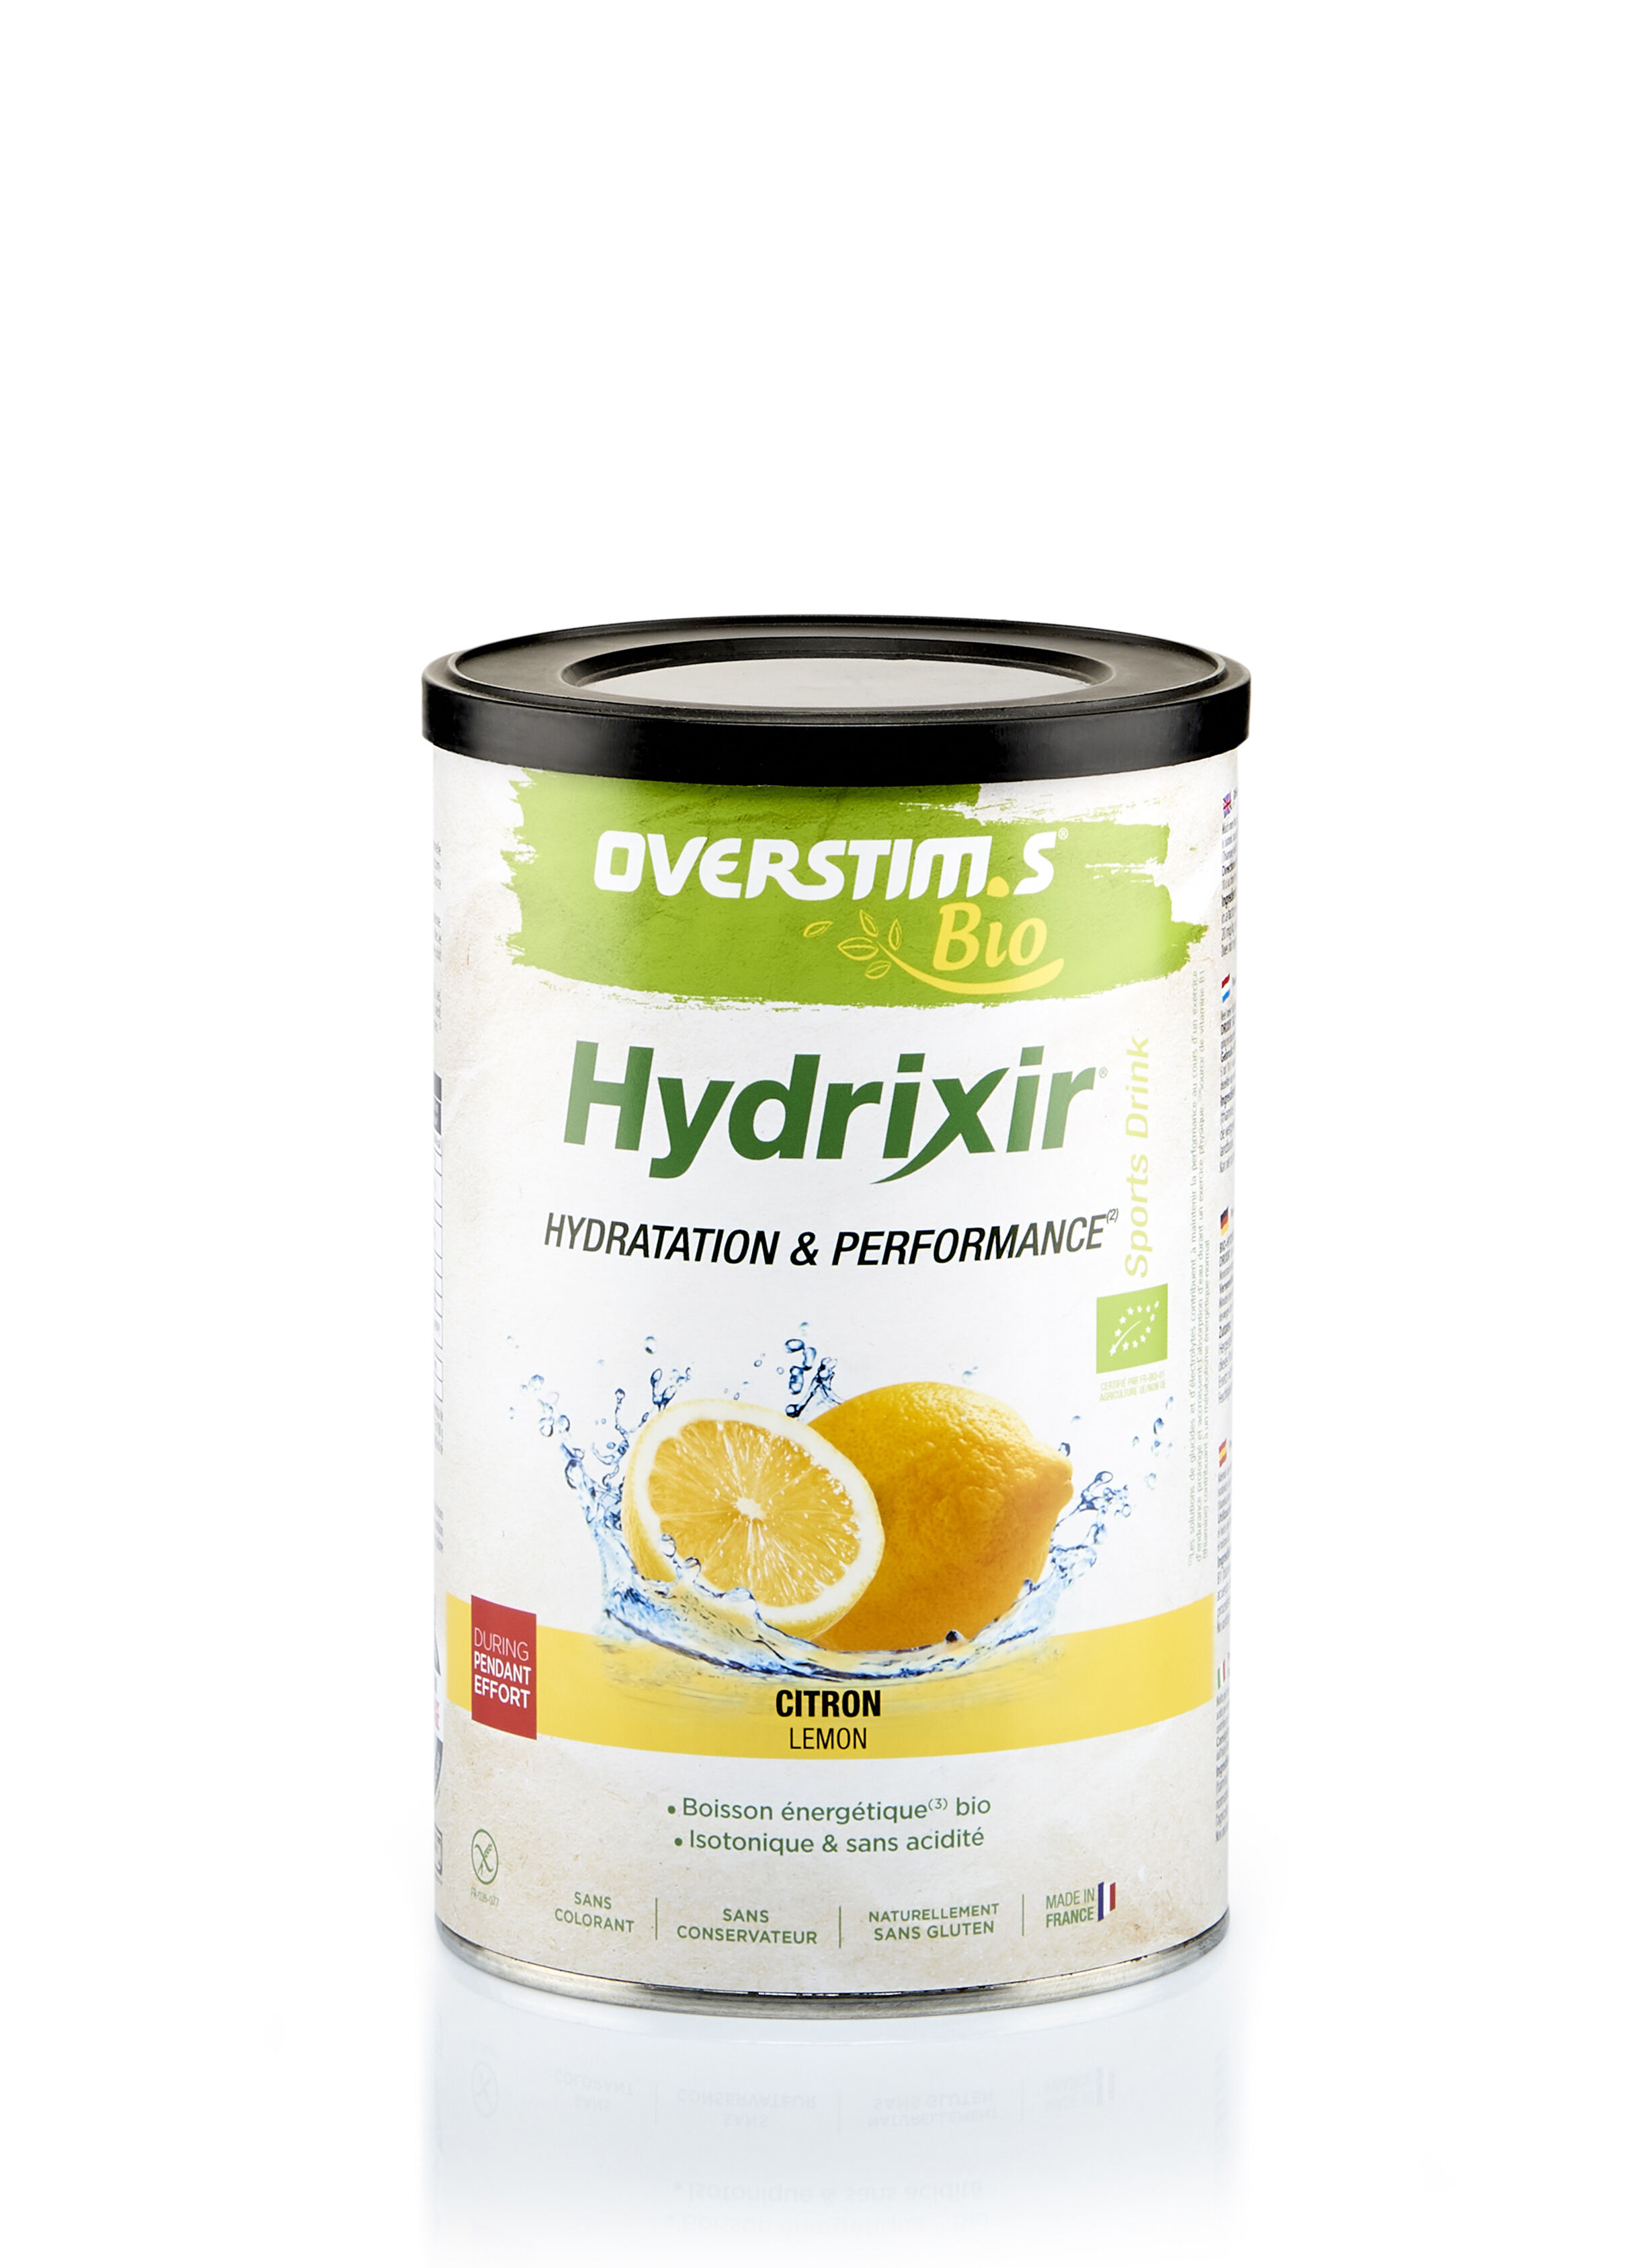 Overstim.s Hydrixir Antioxydant Bio - Energidryck